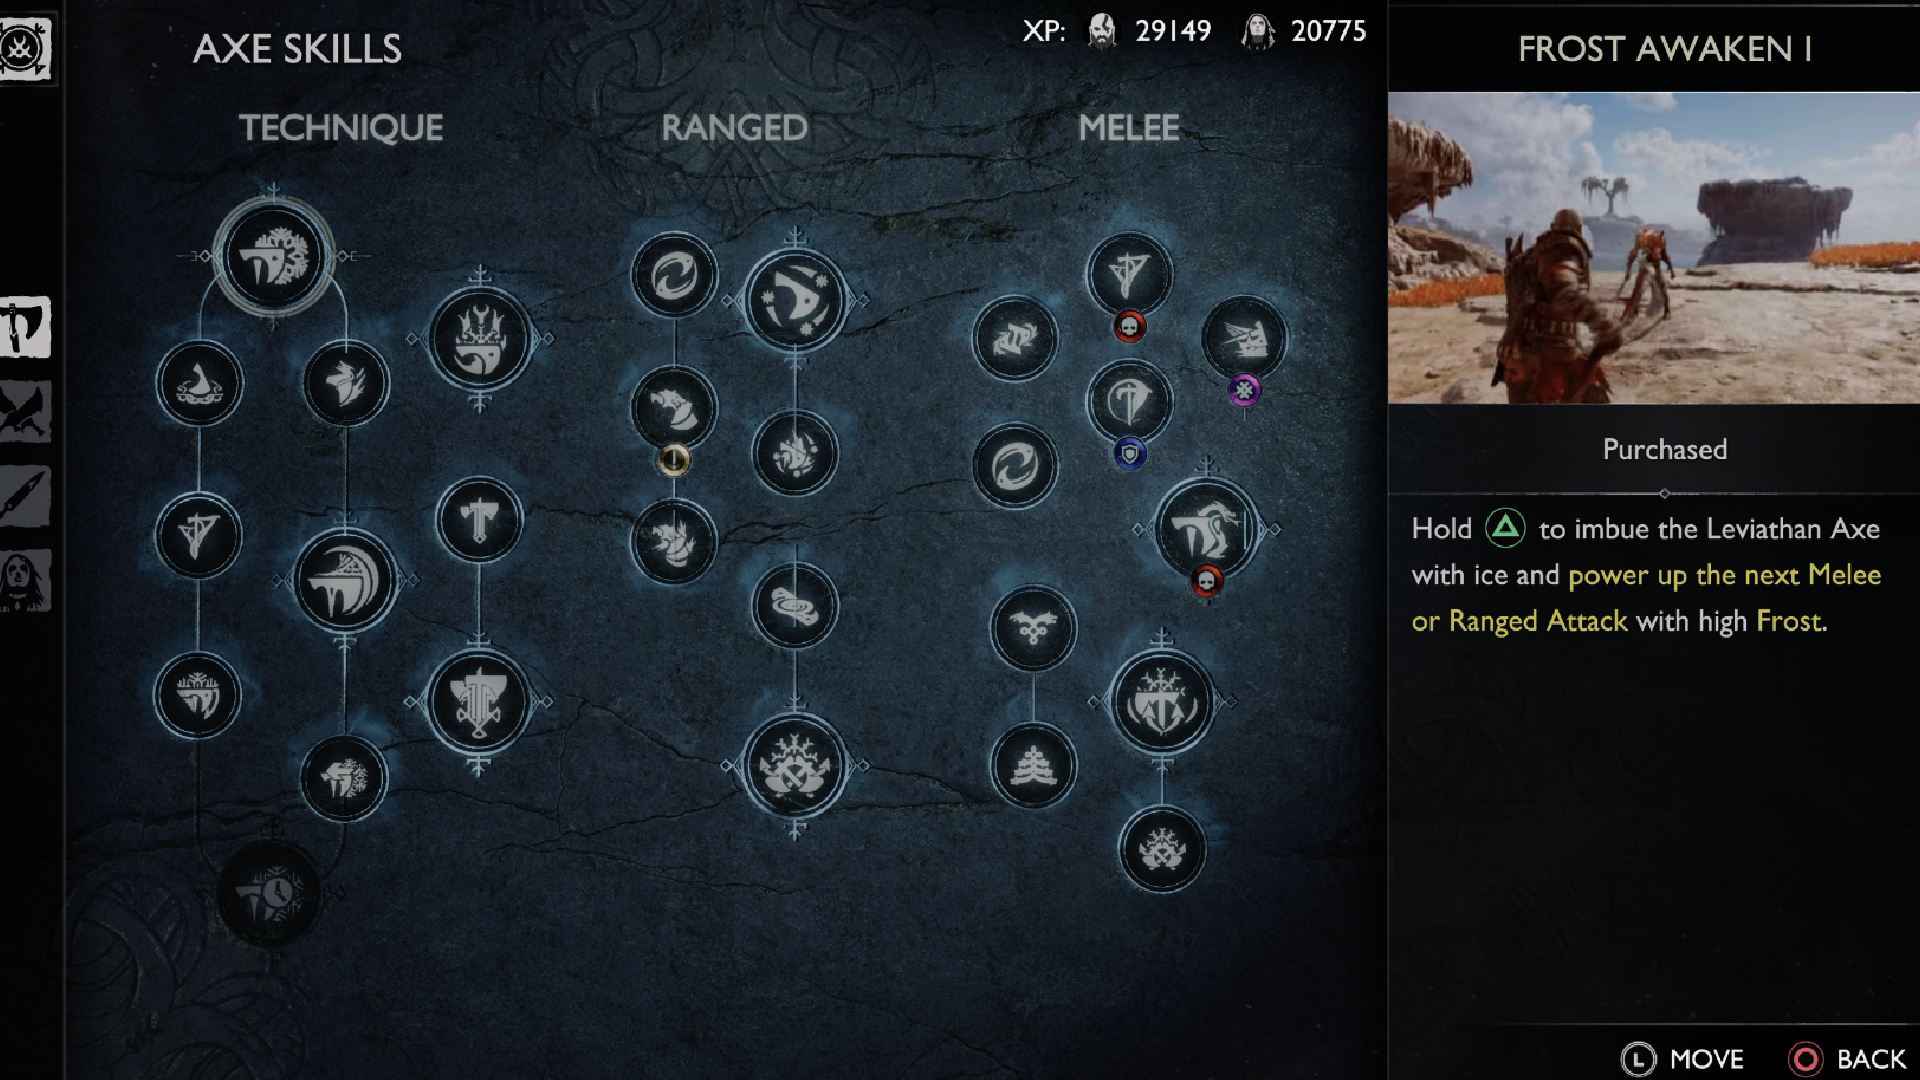 God of War Ragnarok Skill Trees: The Leviathon Axe's skills can be seen